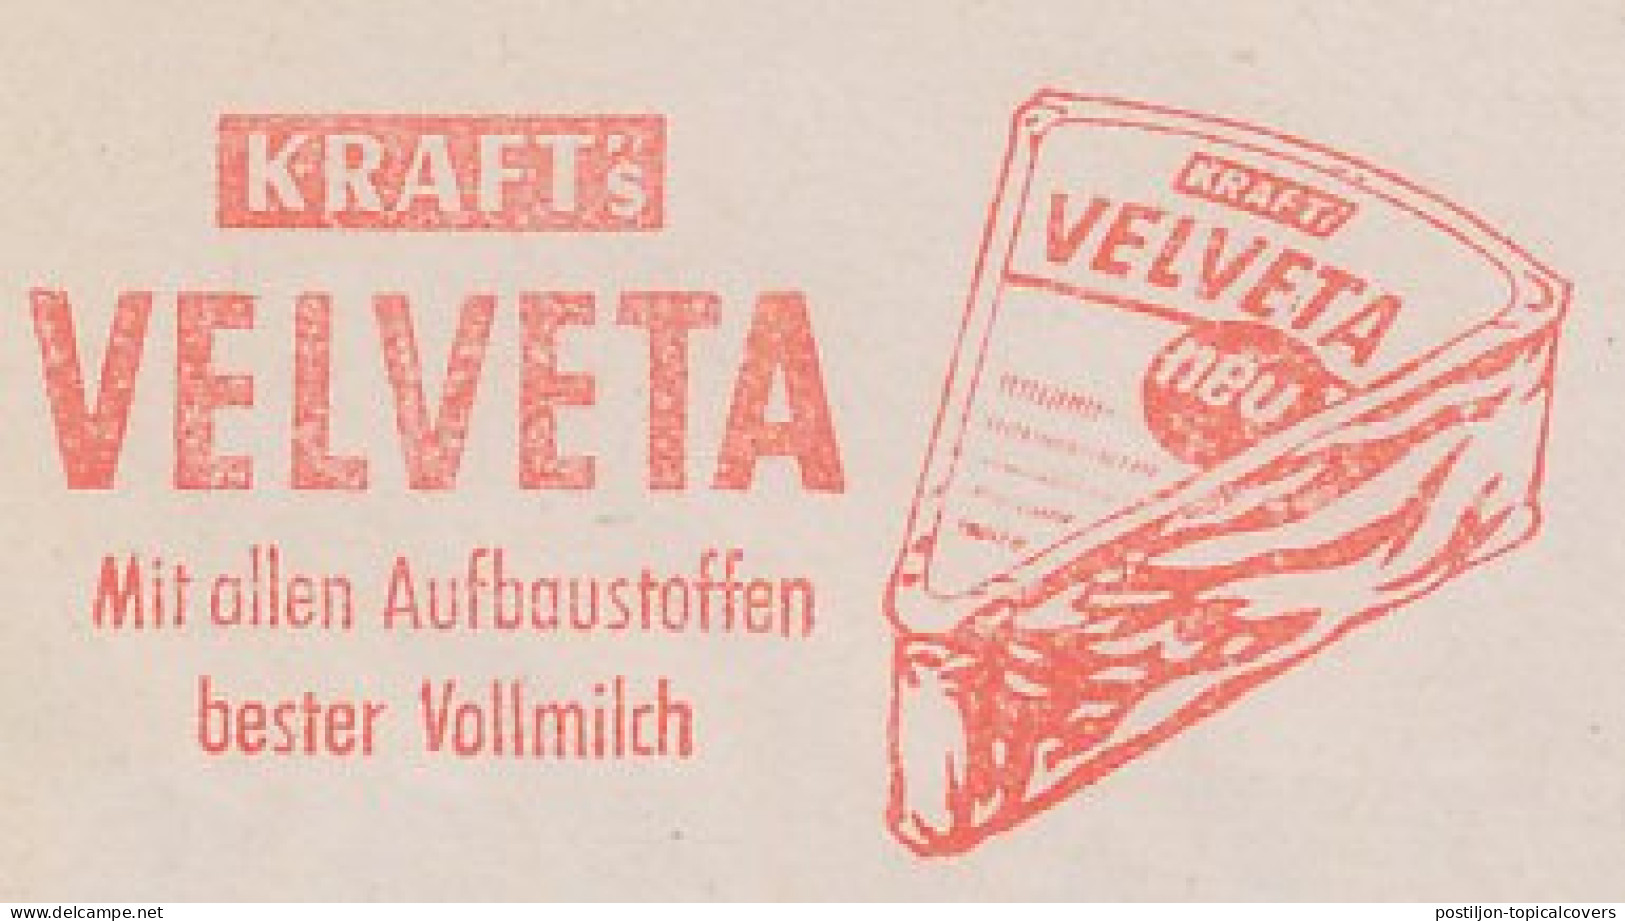 Meter Cut Germany 1962 Cheese - Velveta - Ernährung